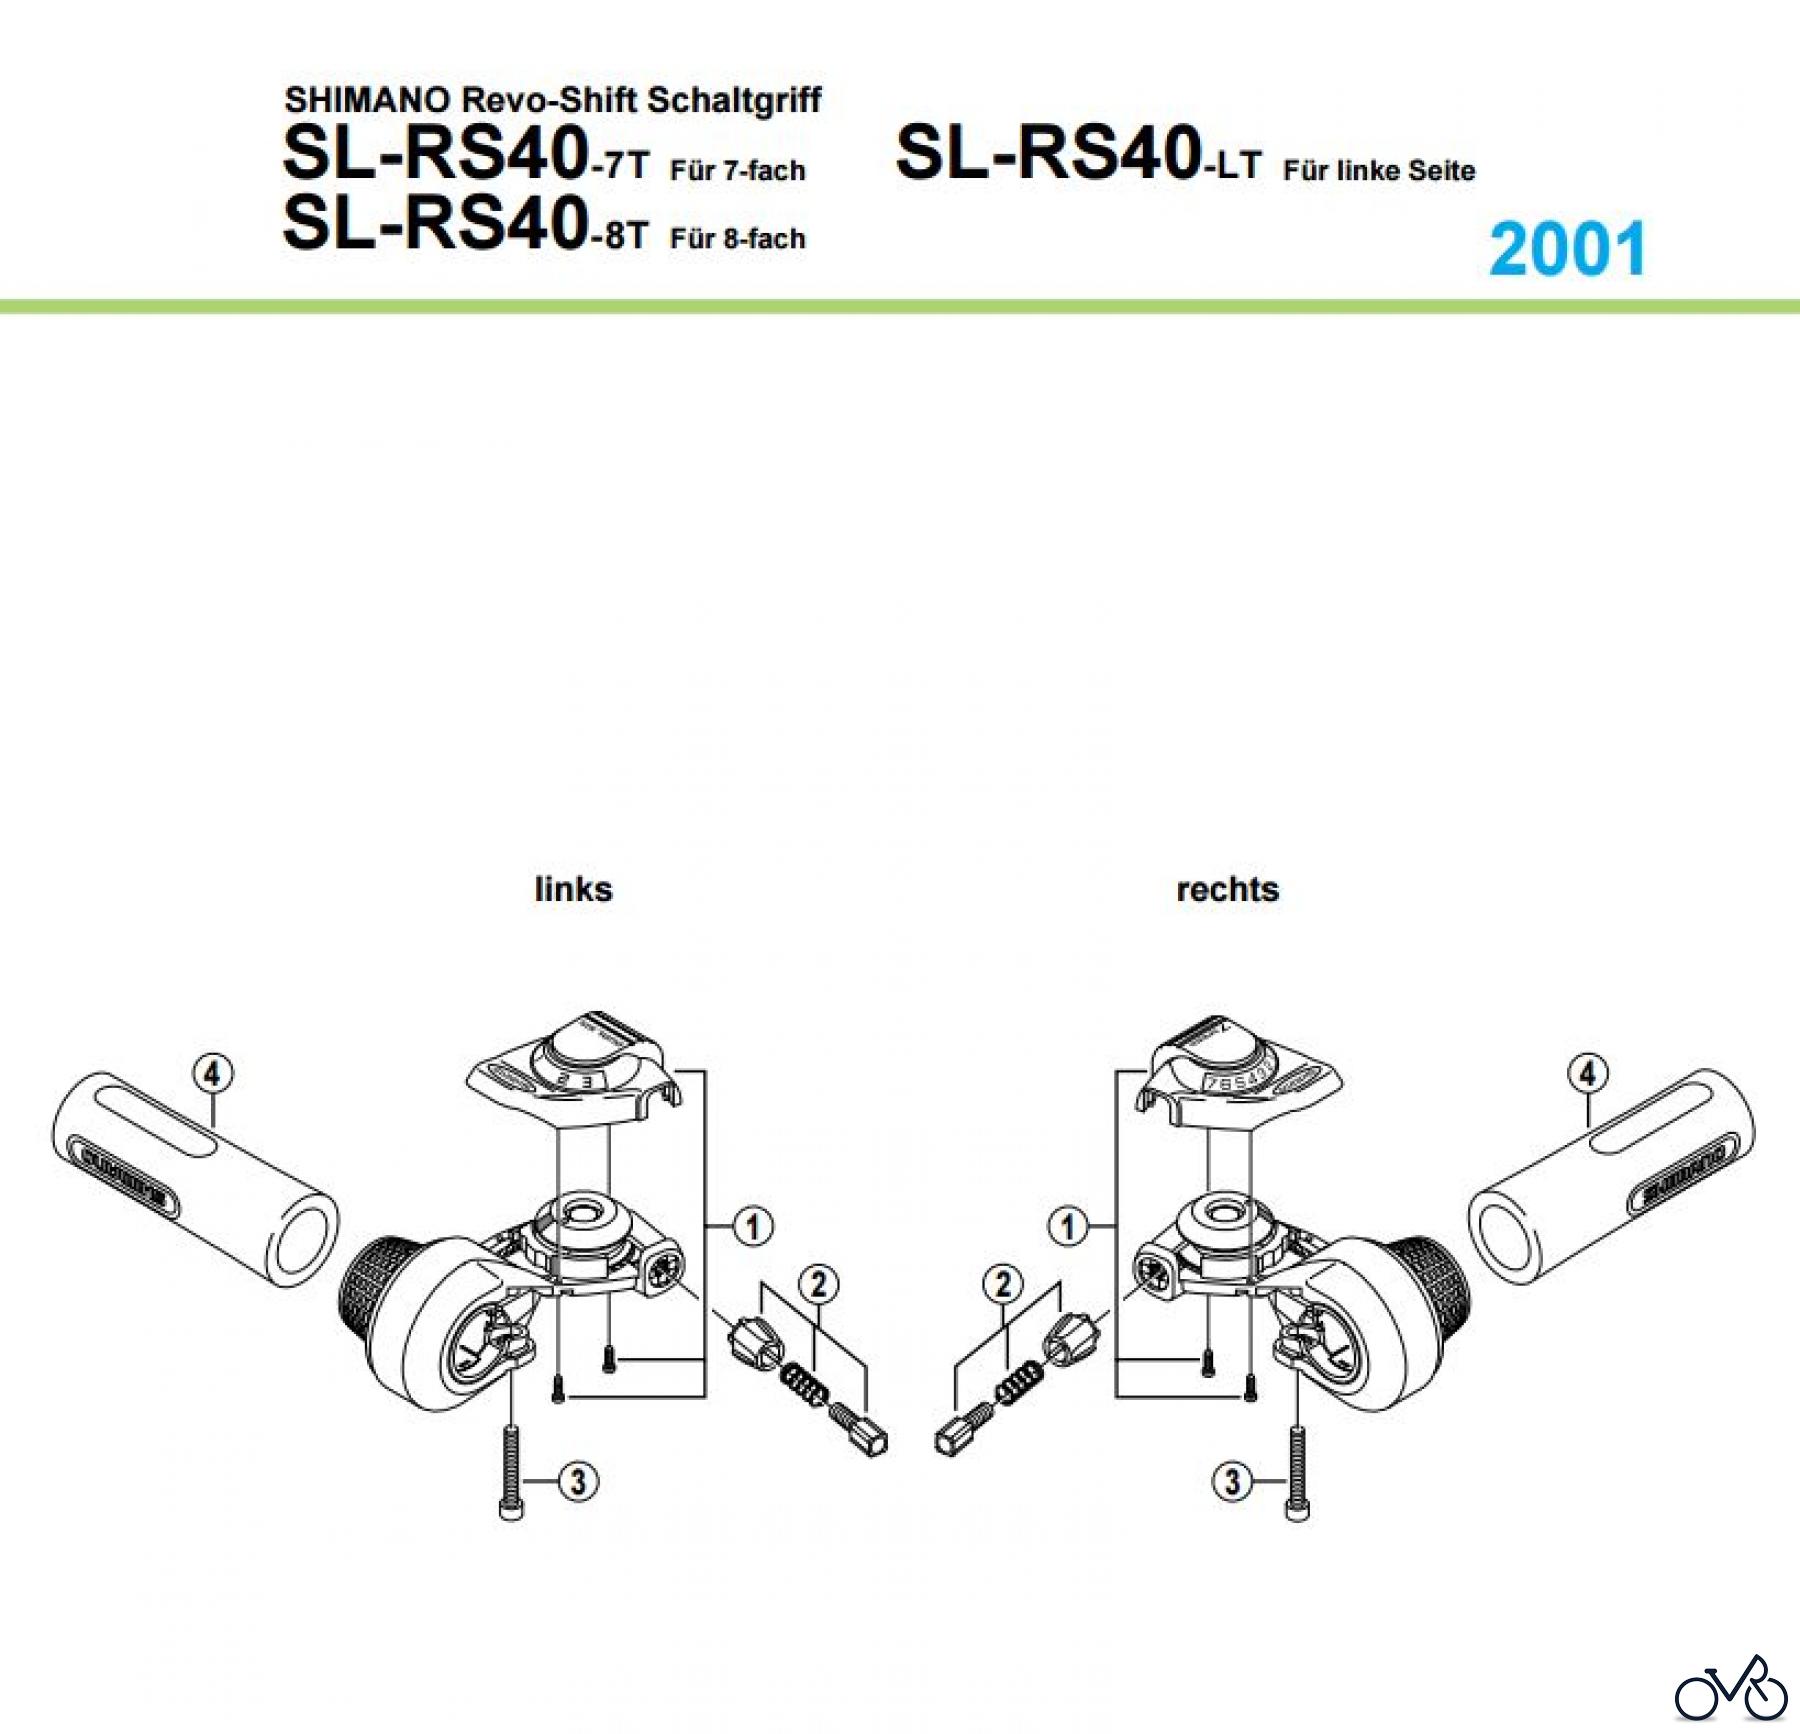  Shimano SL Shift Lever - Schalthebel SL-RS40, 2001 SHIMANO Revo-Shift Schaltgriff